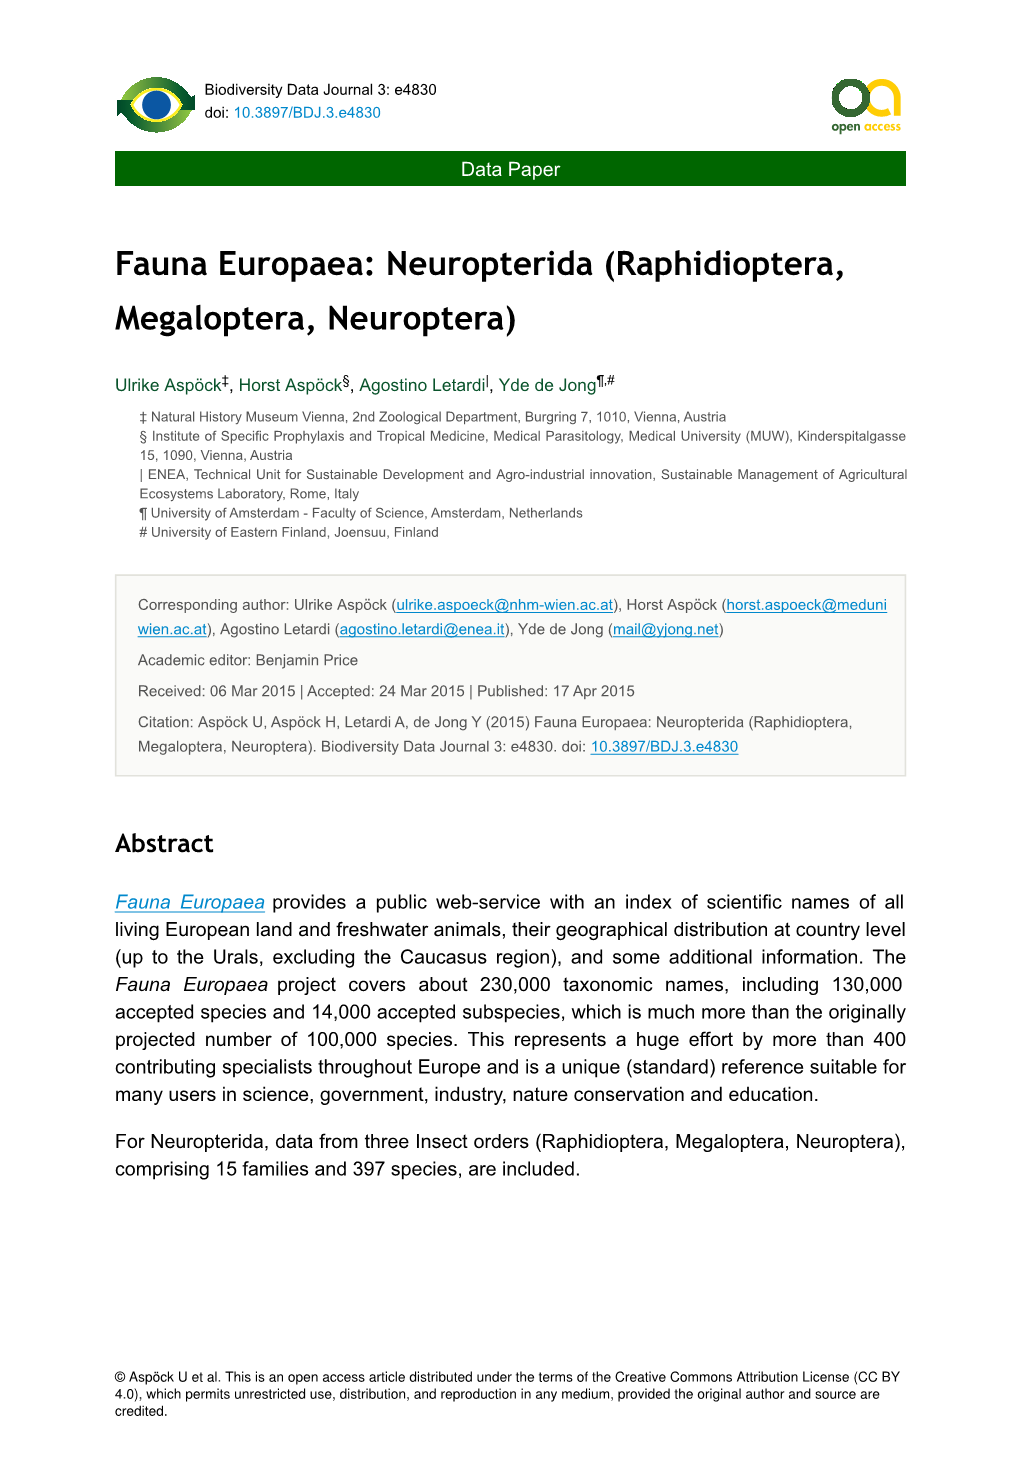 Fauna Europaea: Neuropterida (Raphidioptera, Megaloptera, Neuroptera)